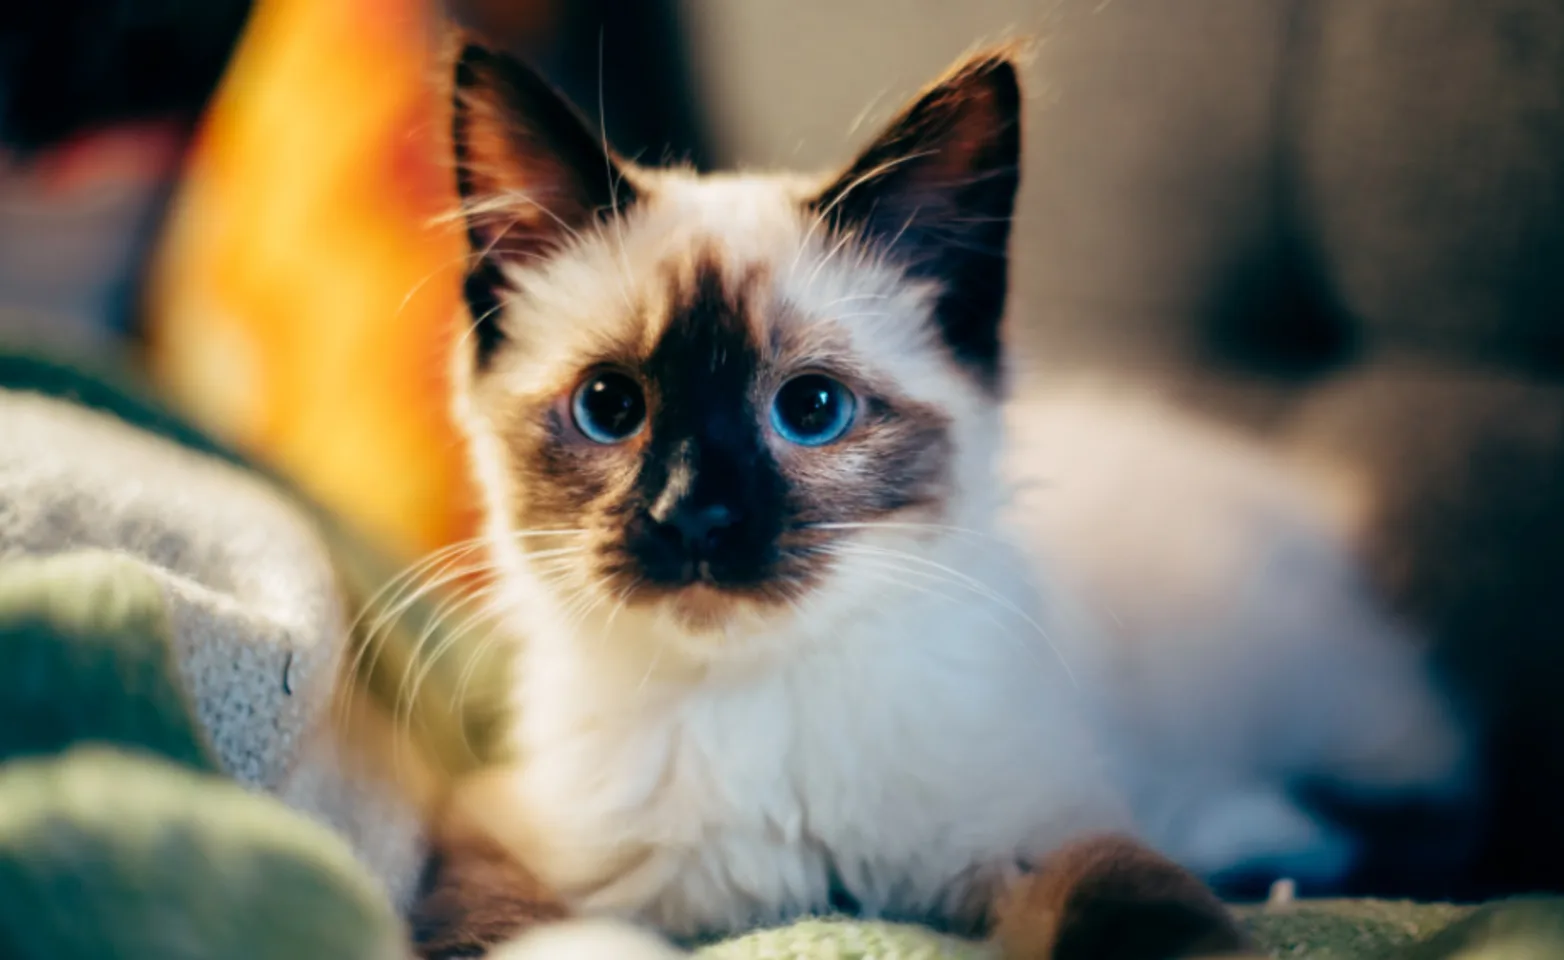 Black & White Kitten With Blue Eyes